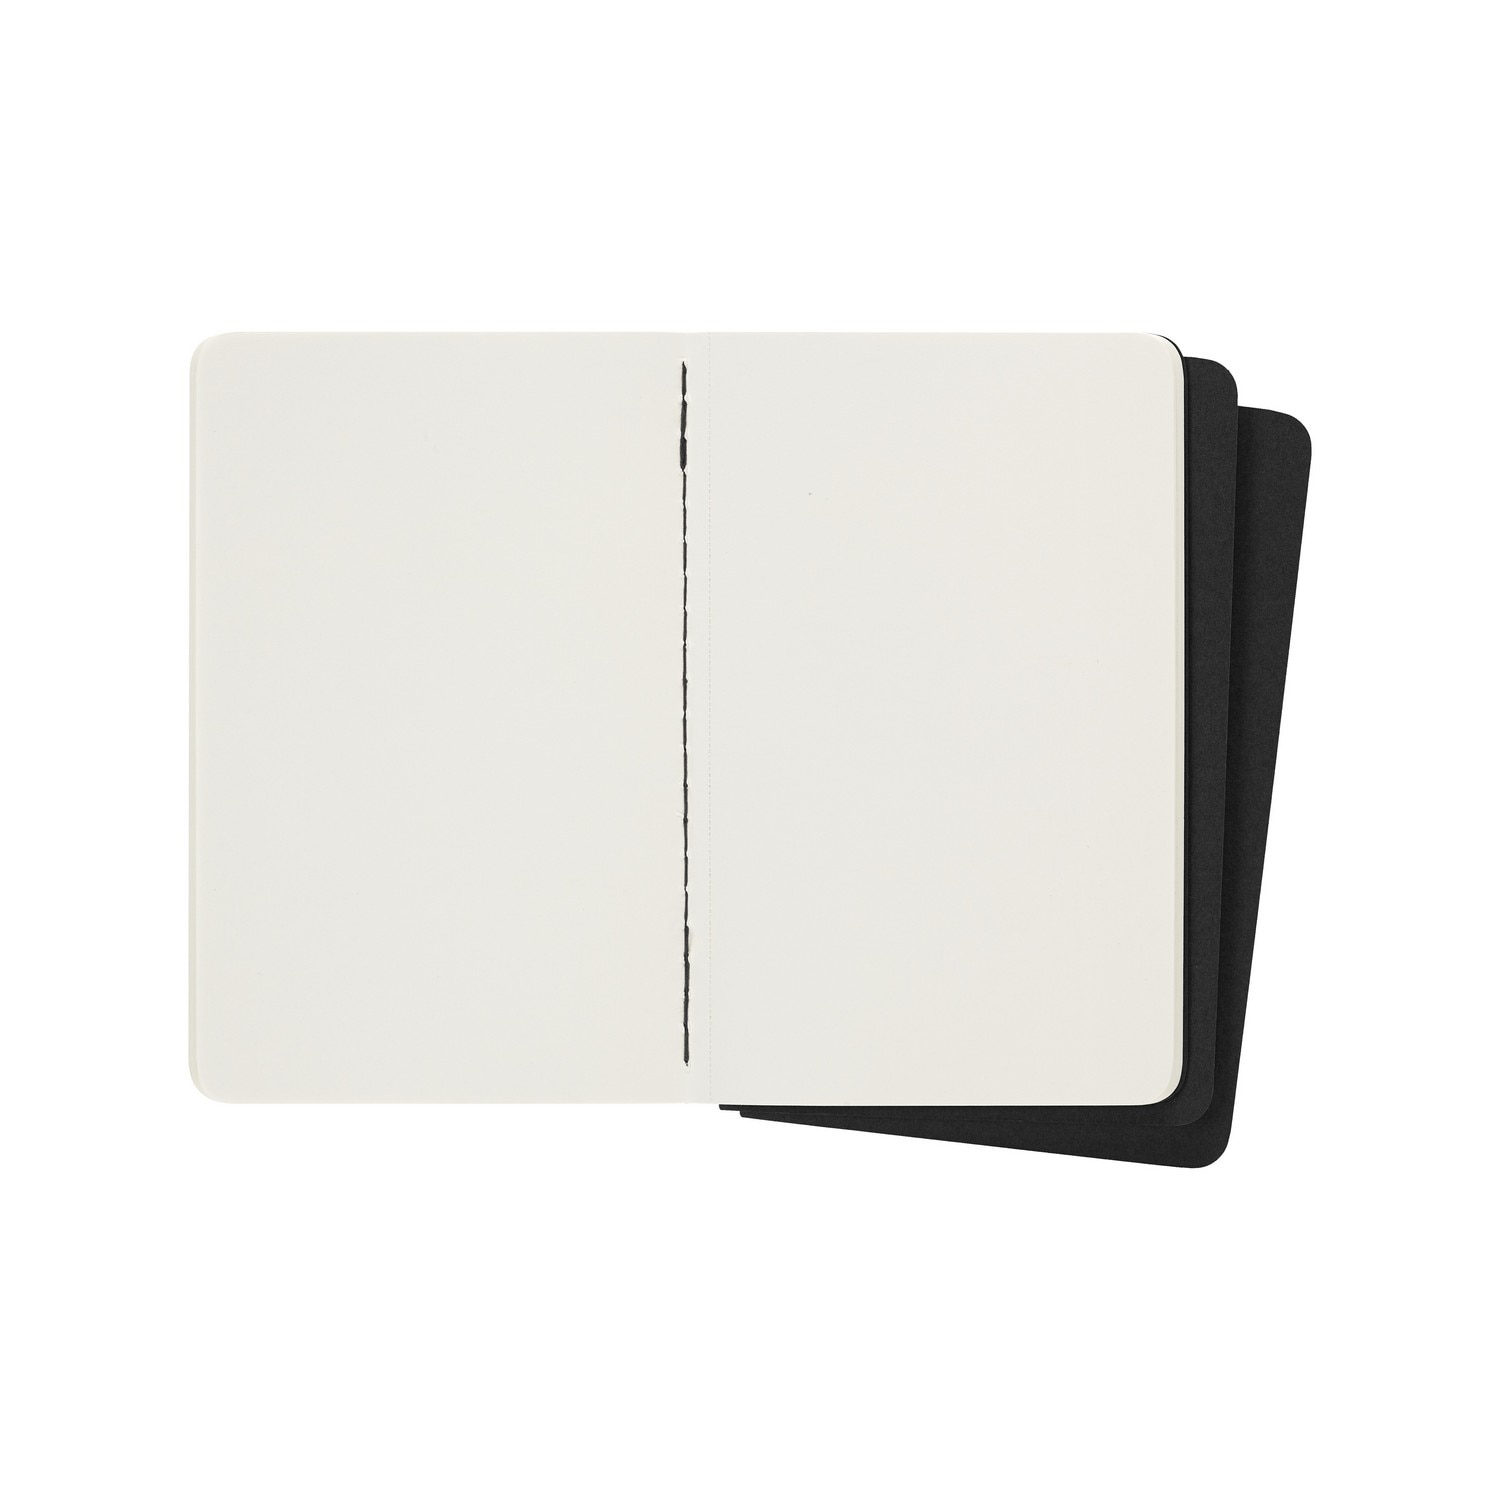 Moleskine Cahier Journal (Set of 3)Pocket Plain Black Soft Cover